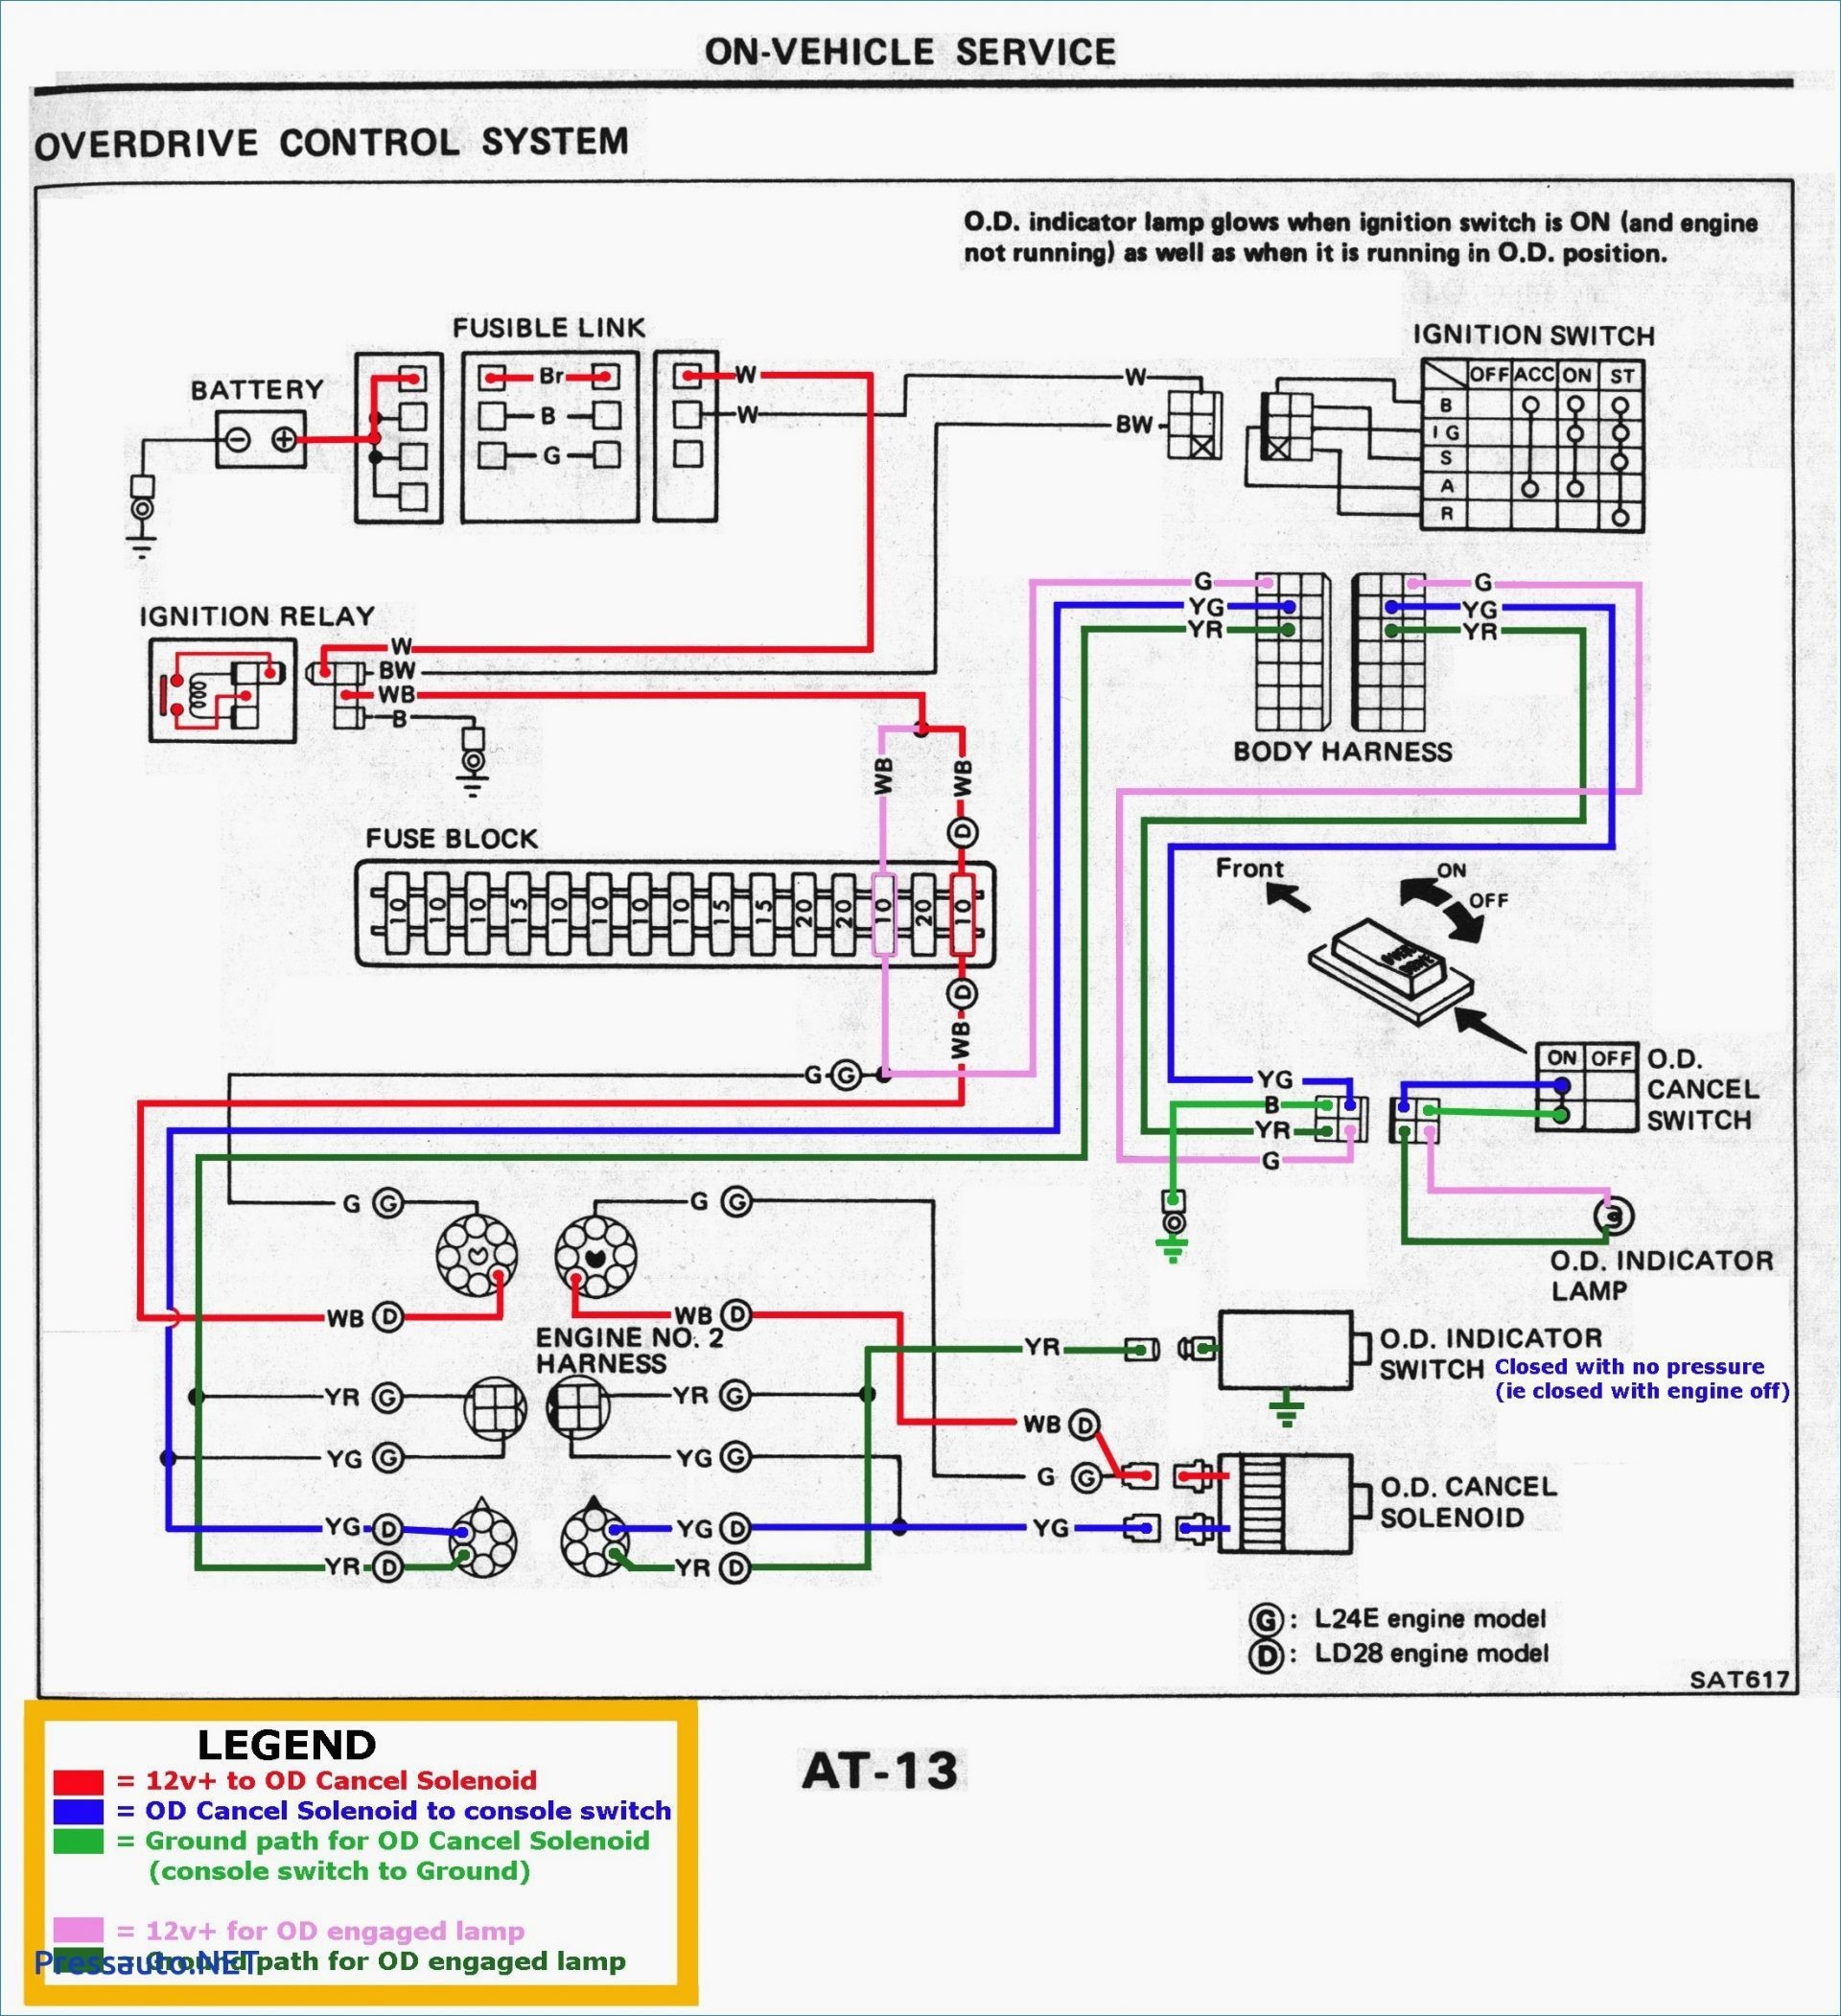 2002 toyota Tacoma Wiring Diagram Wiring Diagram ford Galaxy 2001 Wiring Diagram Week Of 2002 toyota Tacoma Wiring Diagram